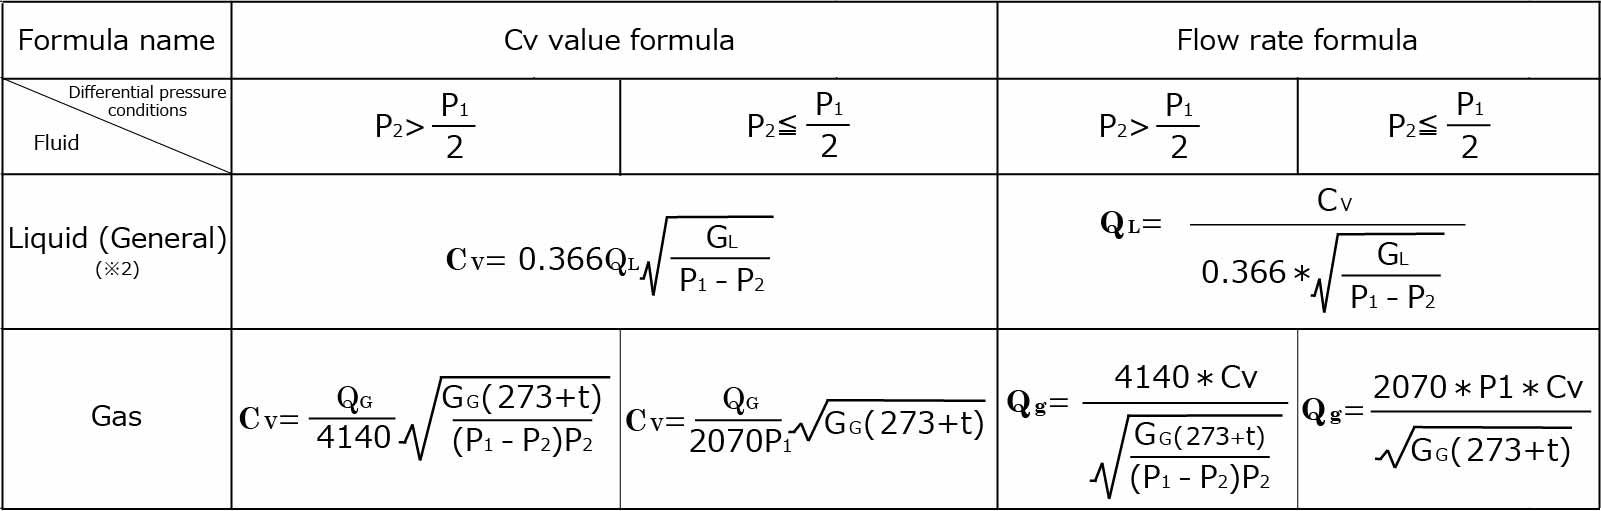 Cv値計算式及び流量計算（Cv値から）式